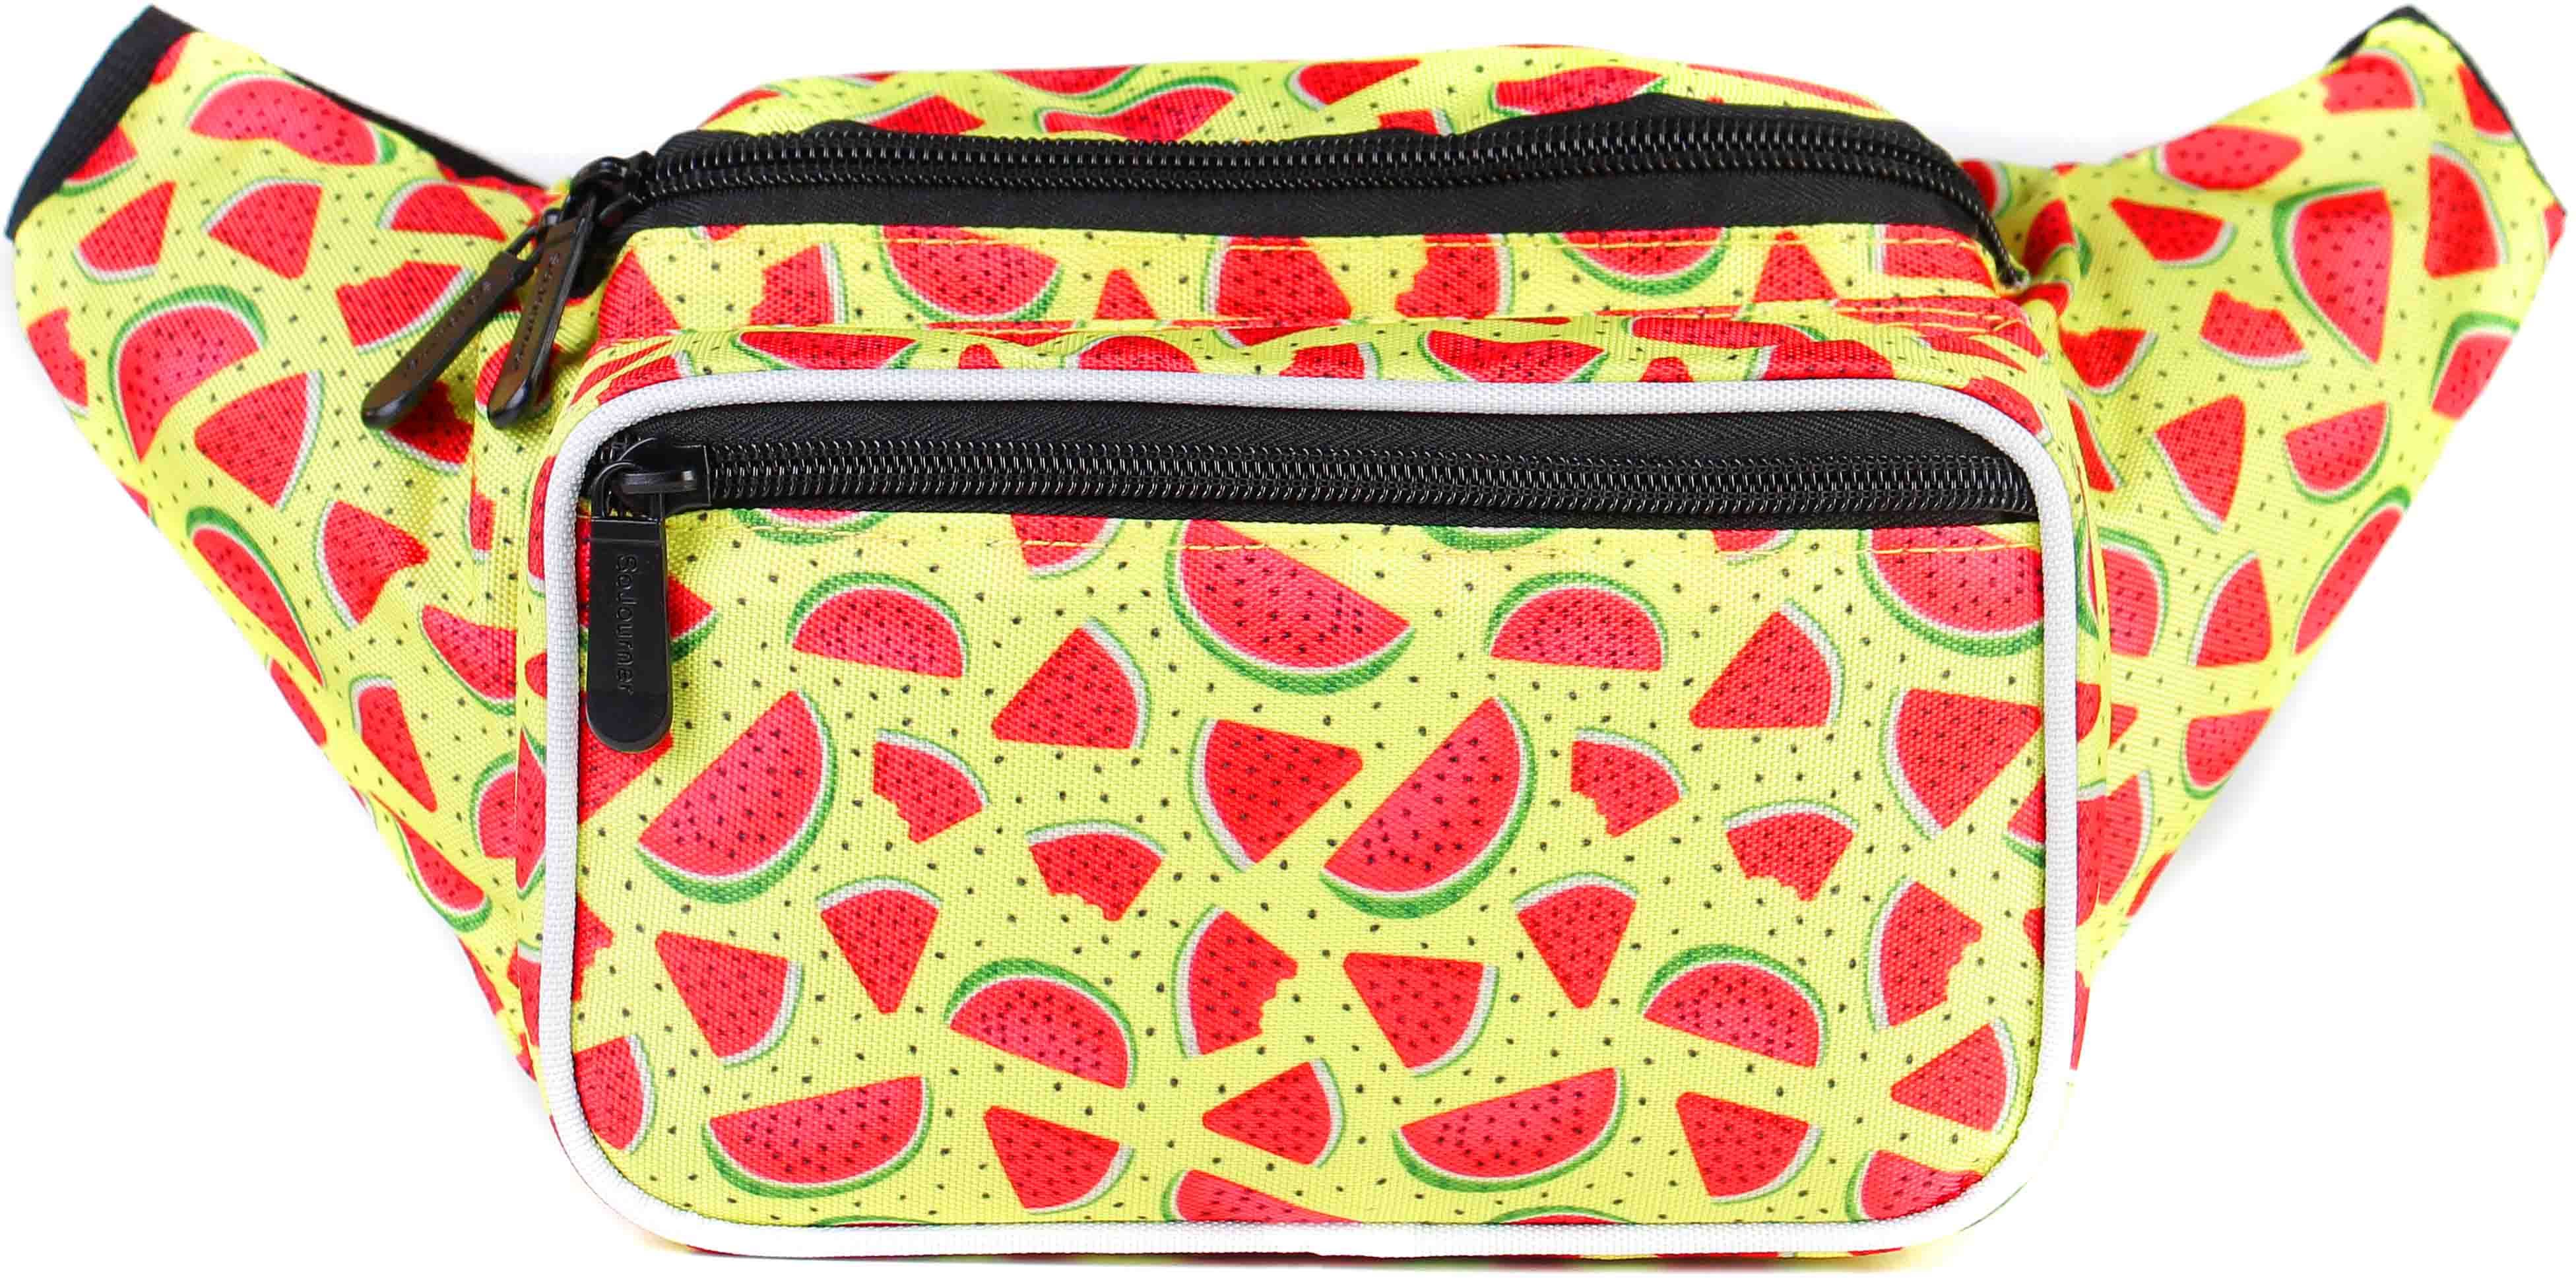 Sale > watermelon bum bag > in stock